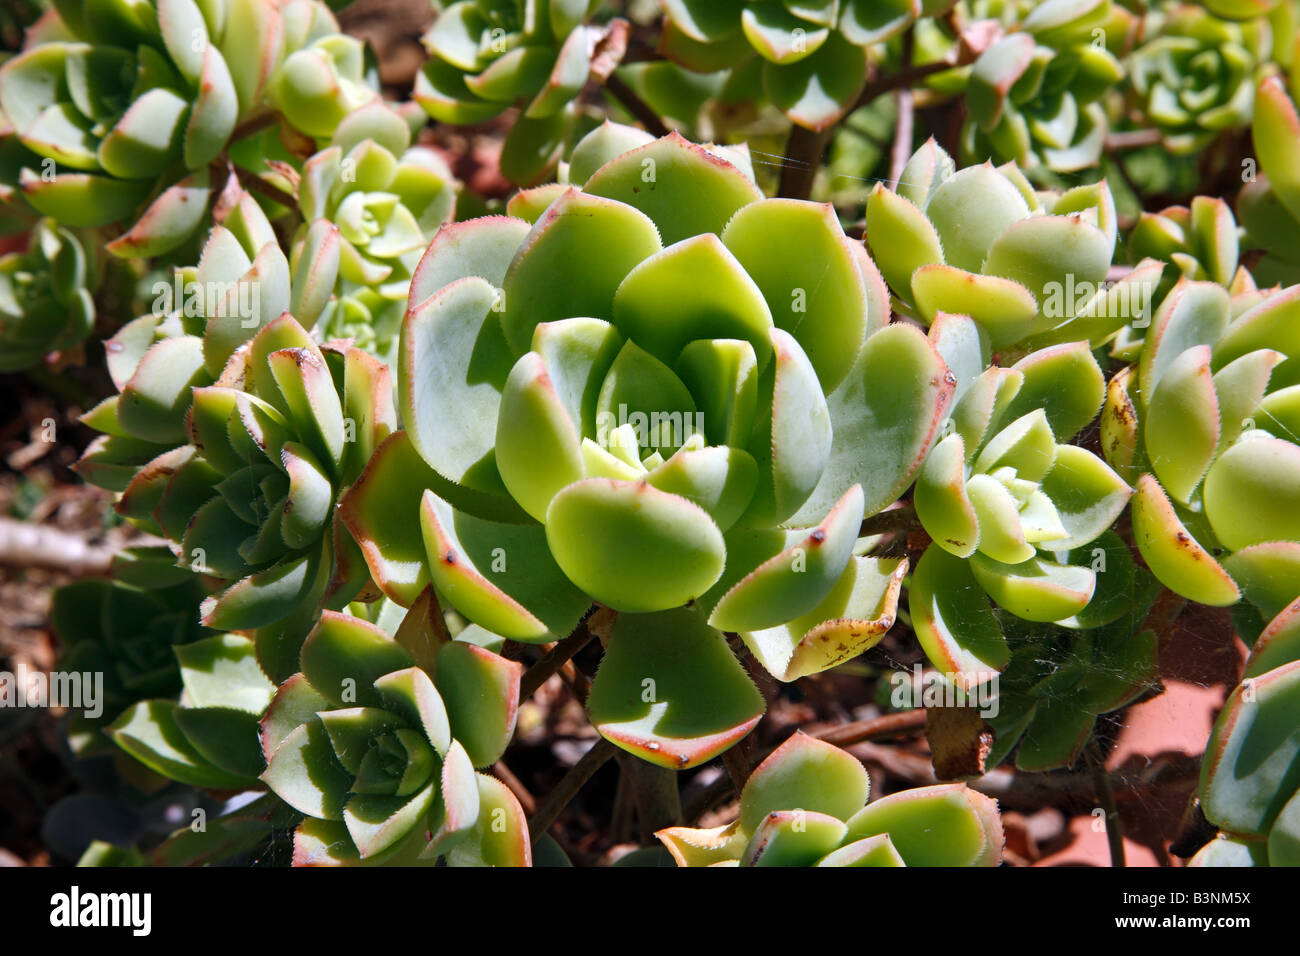 Natur, Pflanzen, Dickblattgewaechse Hauswurze, Crassulaceae, Sempervivum, Banque D'Images